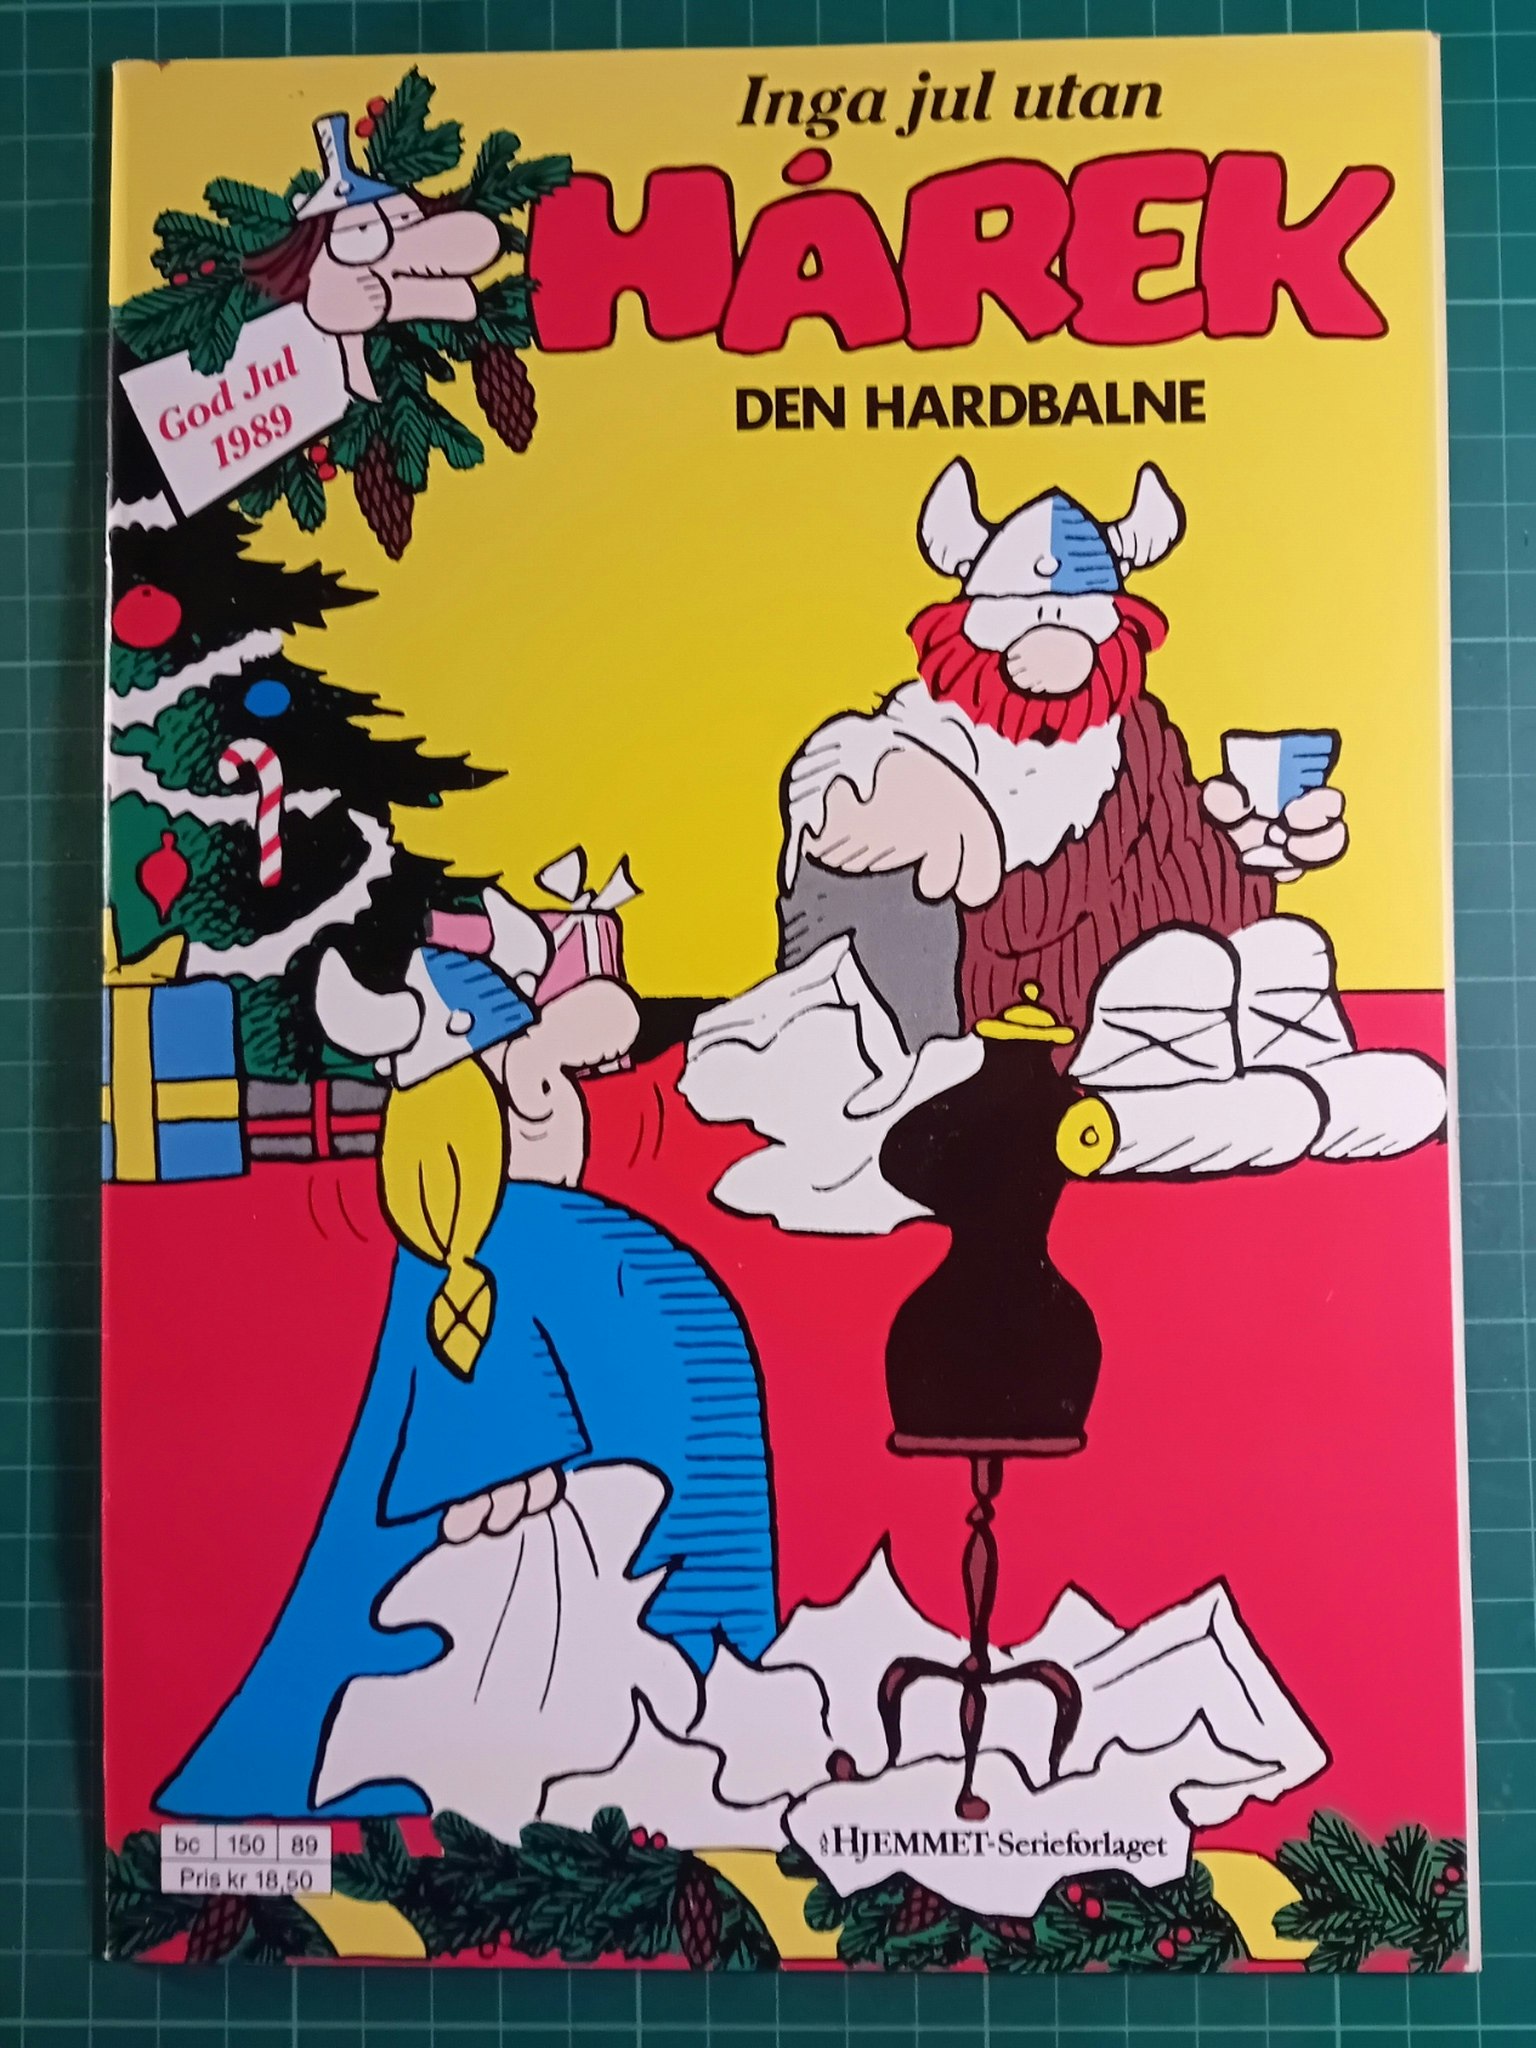 Hårek Julen 1989